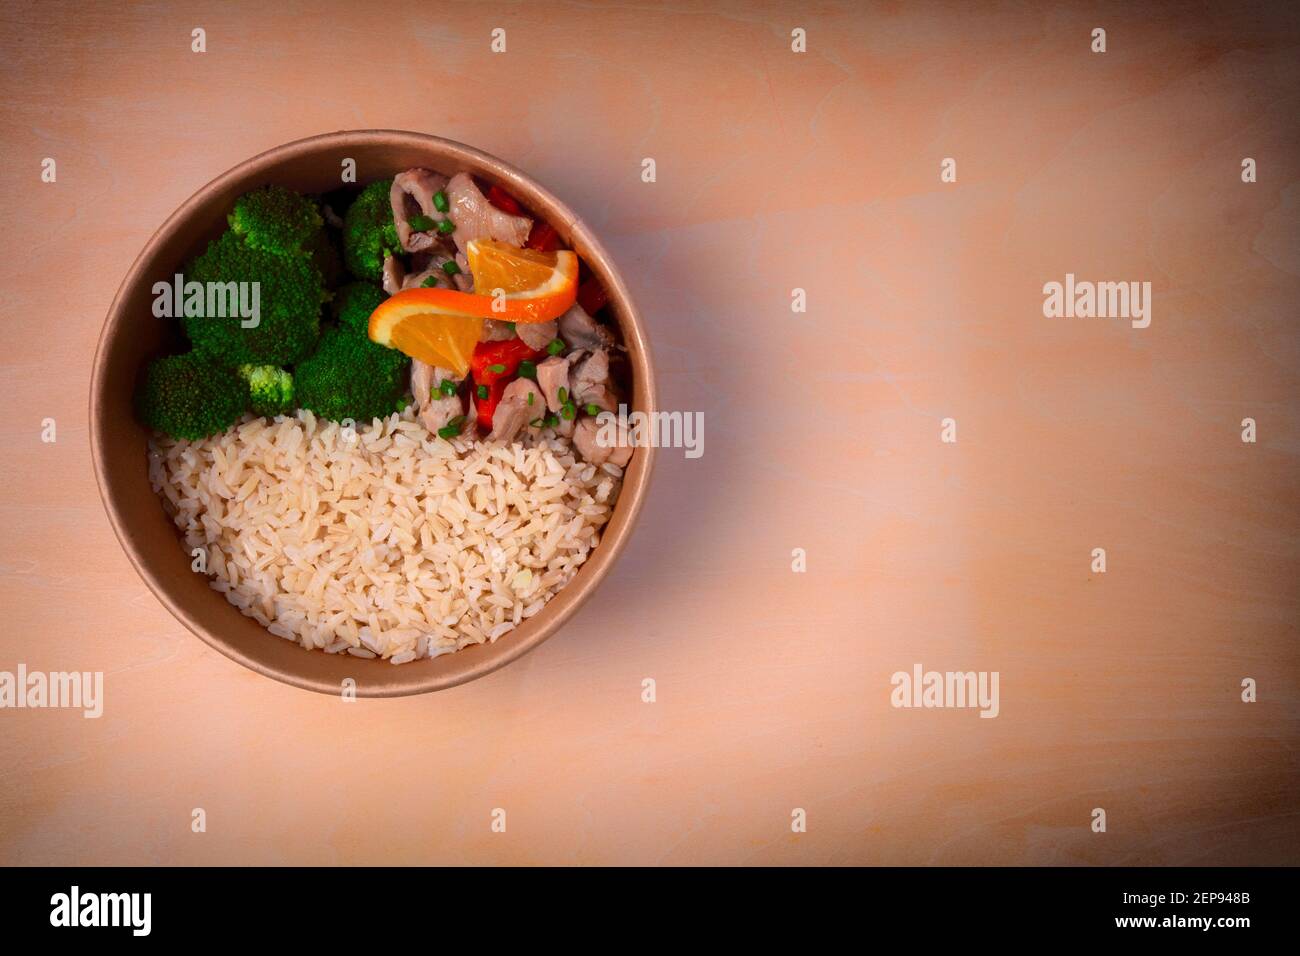 Plates of healthy, balanced Asian food. Stock Photo